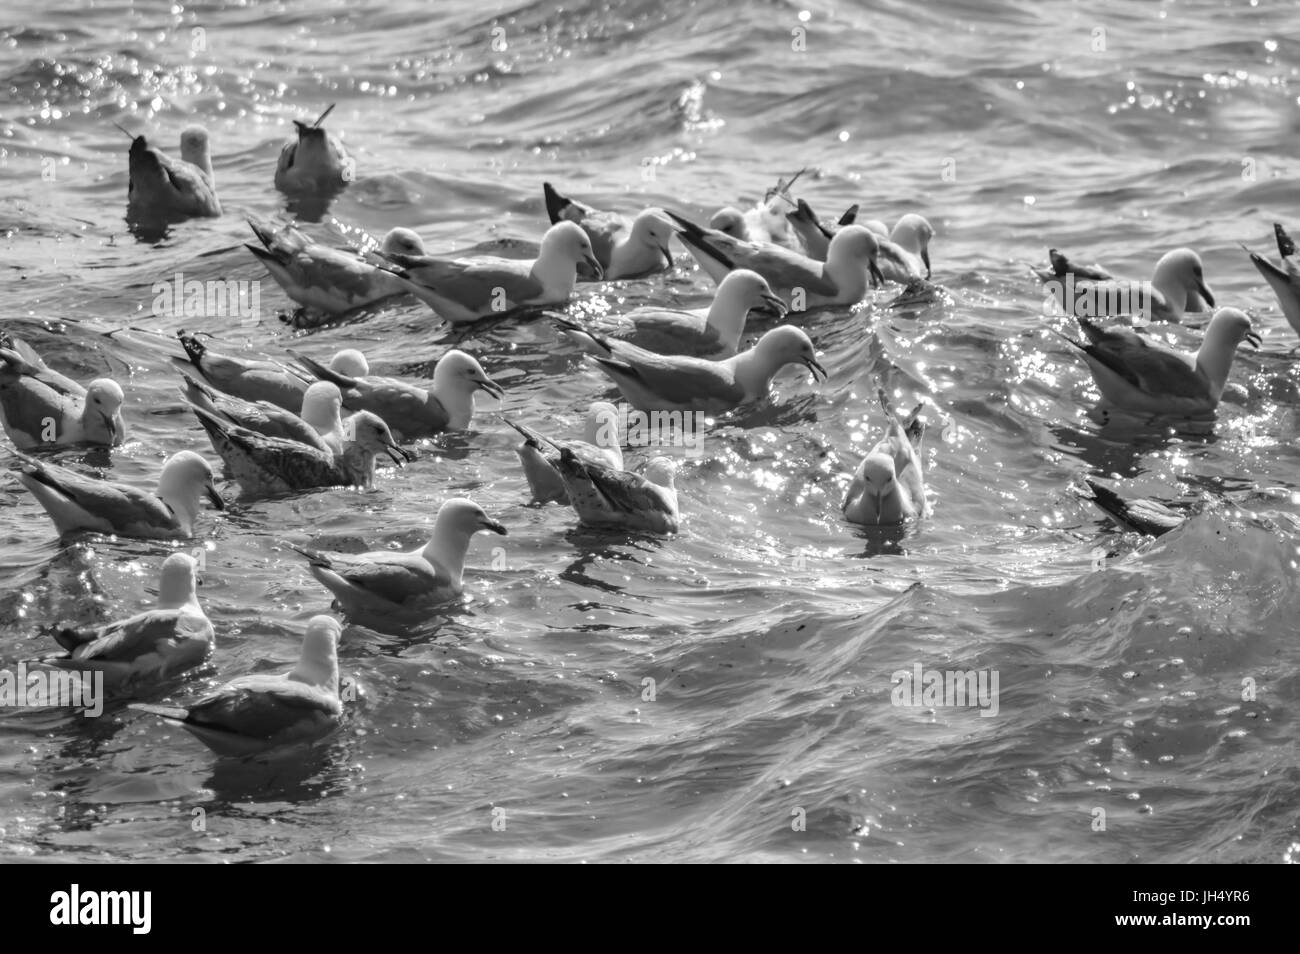 Seagulls in Rough seas Stock Photo